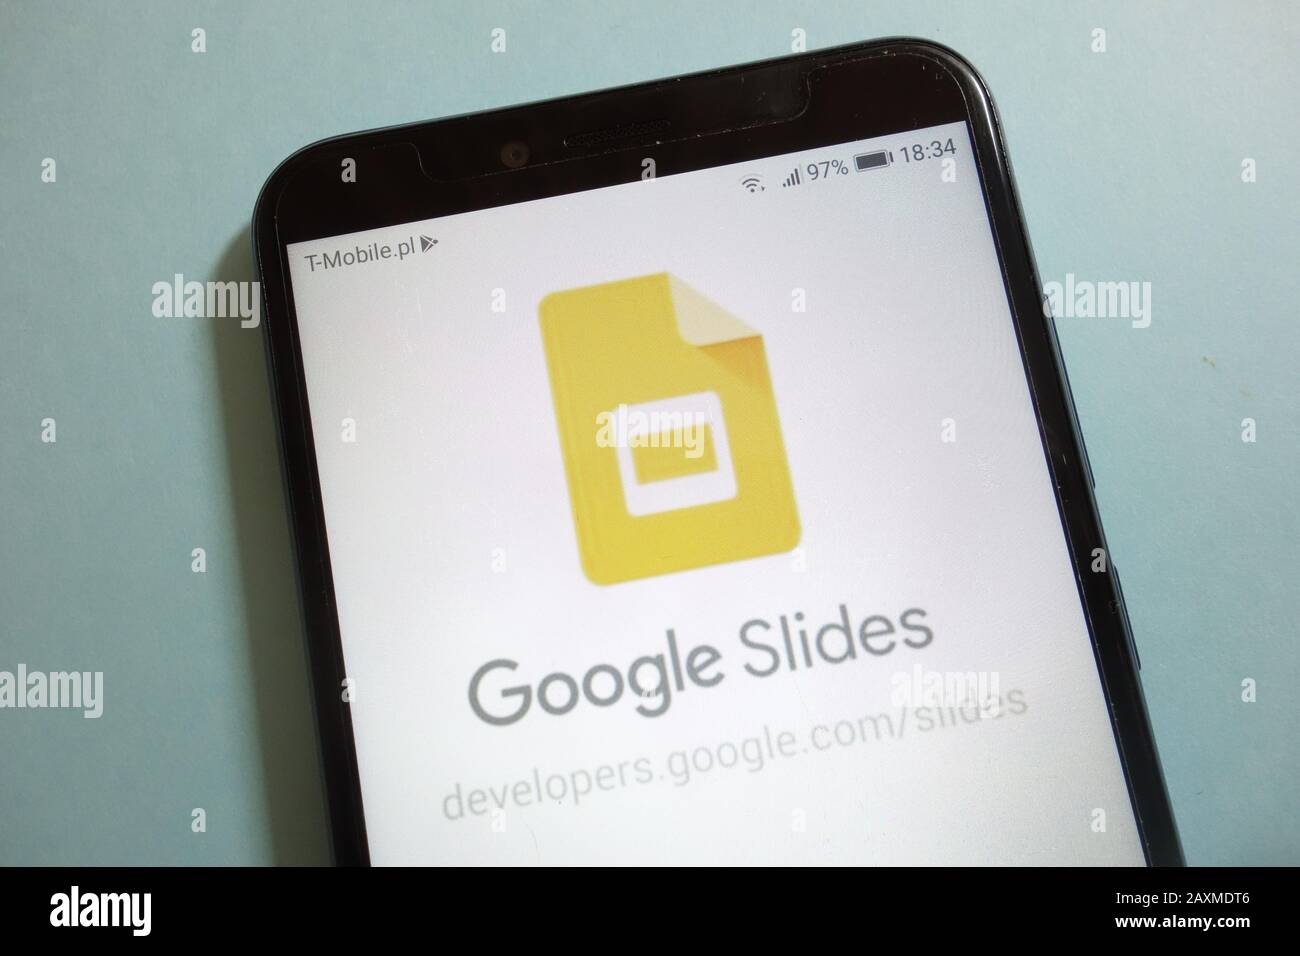 Google Slides logo on smartphone Stock Photo